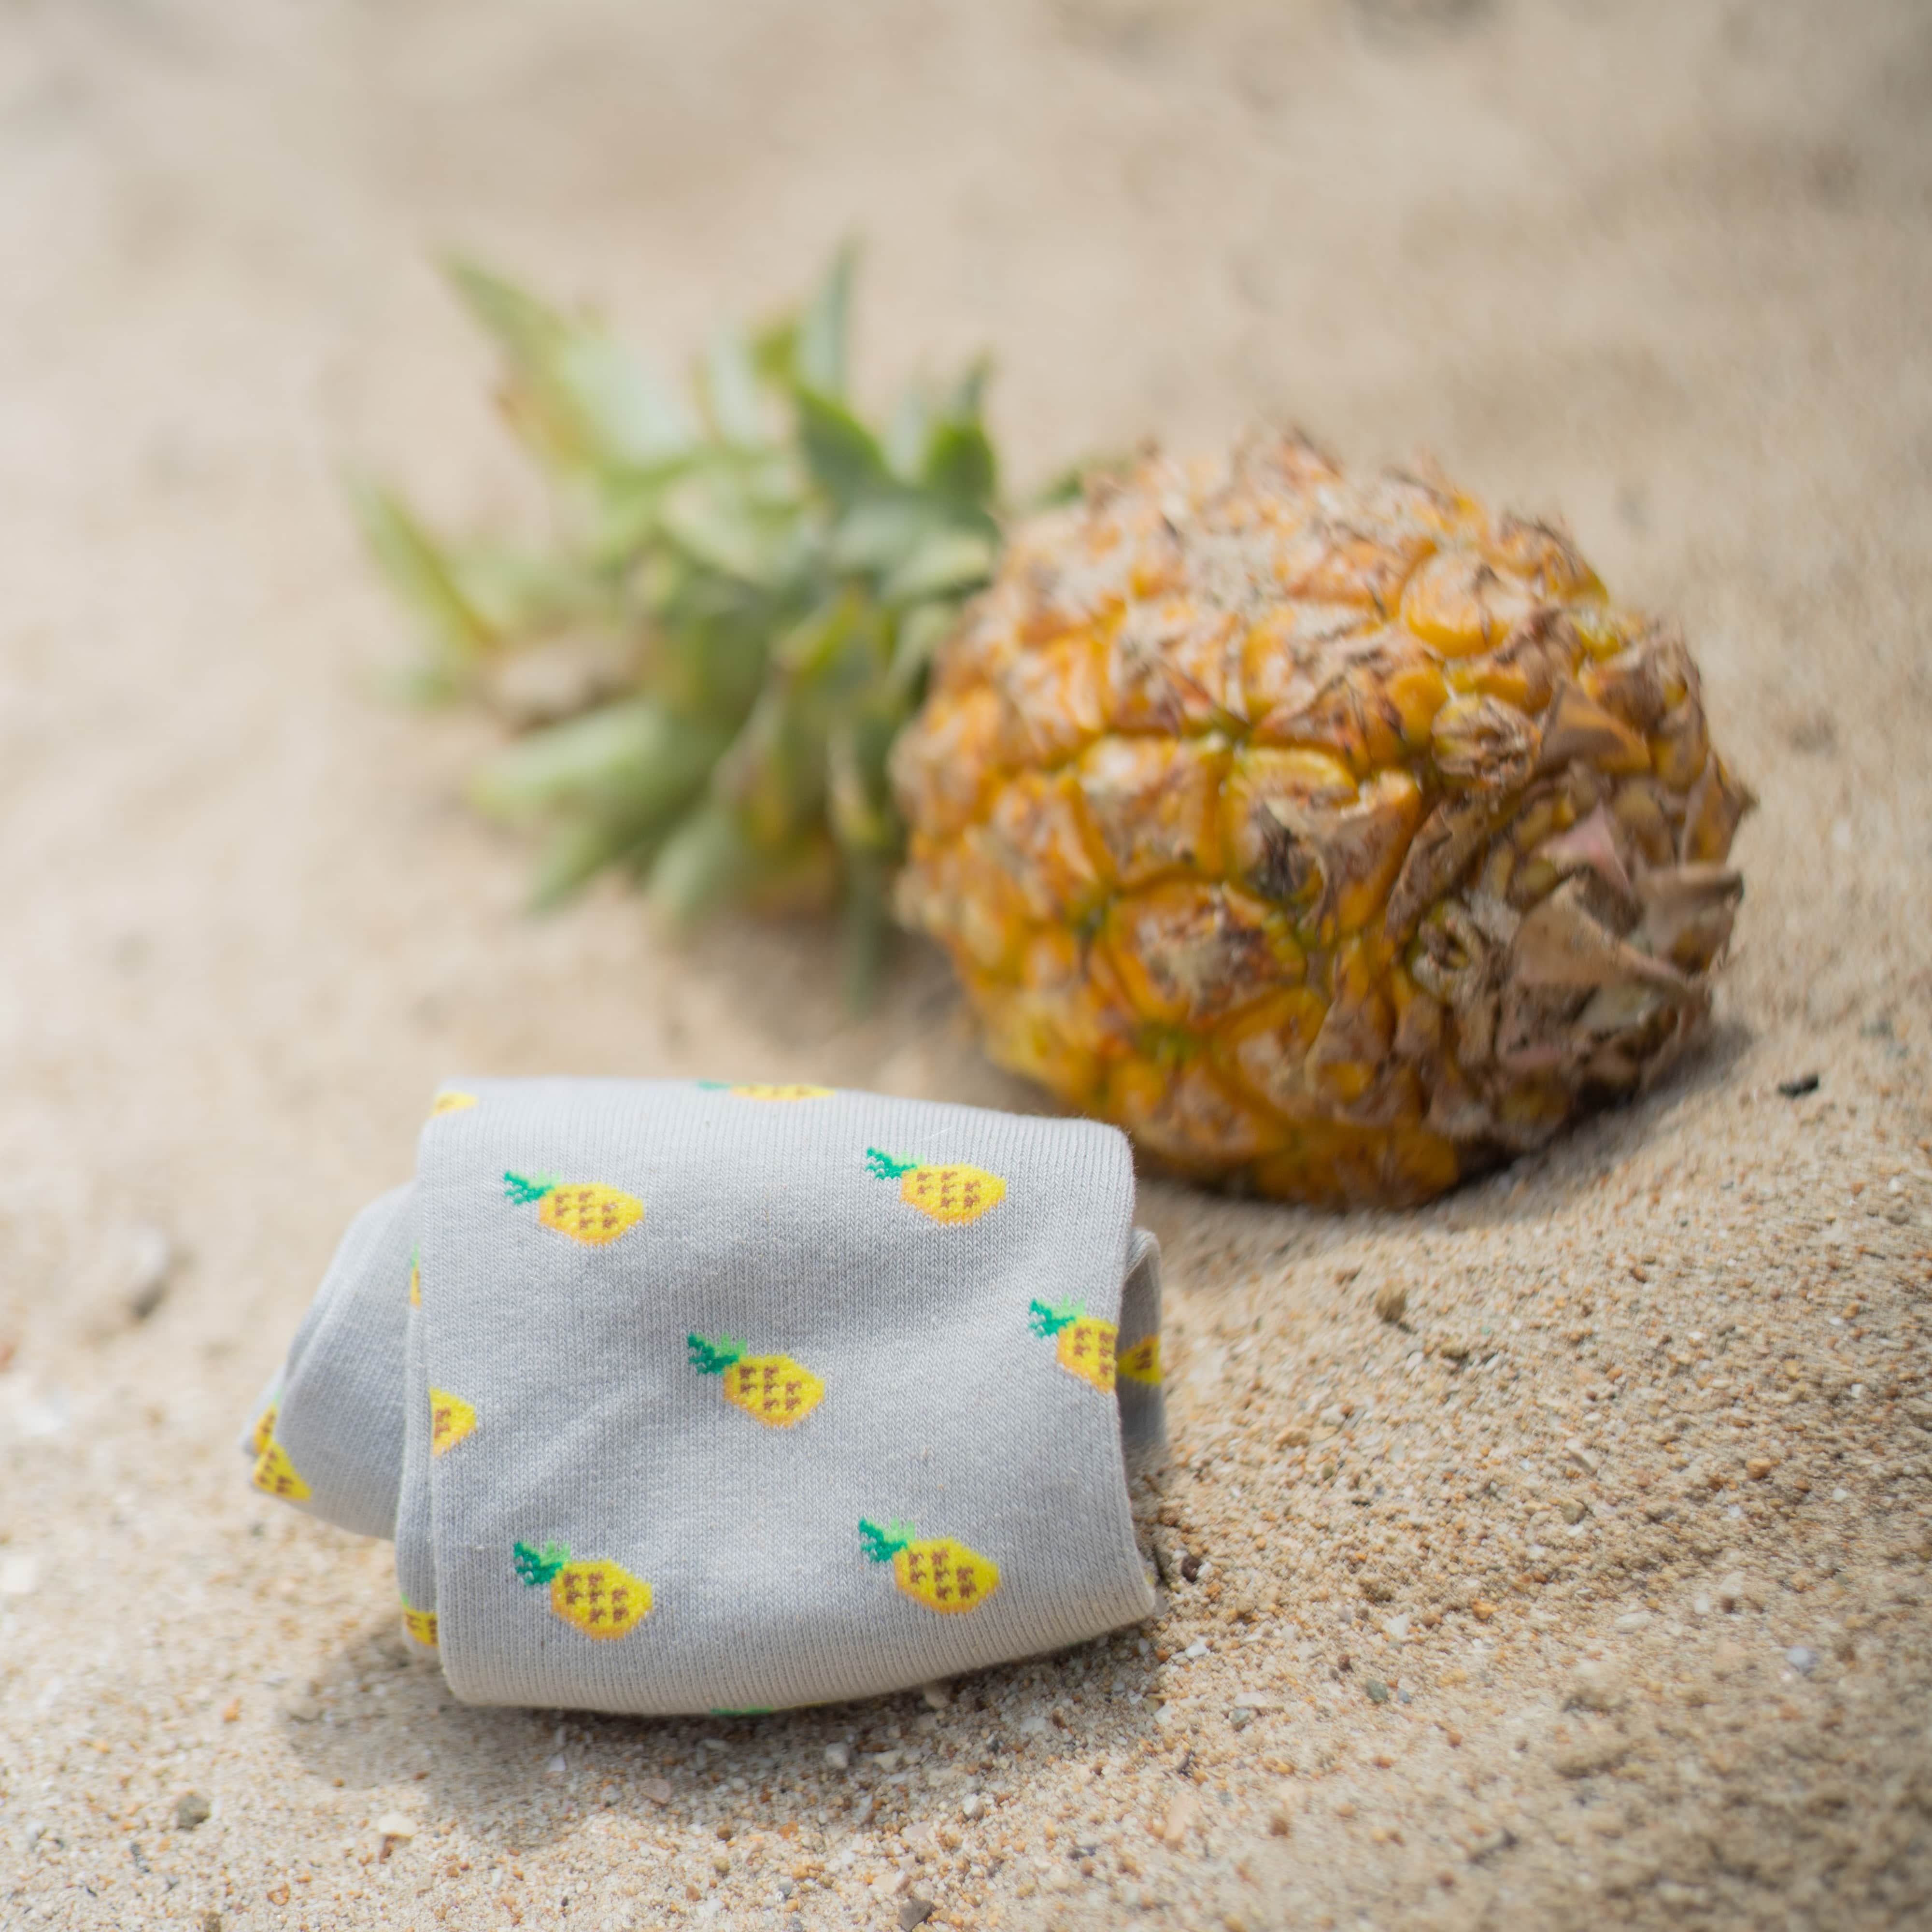 Playful Socks - Pineapple